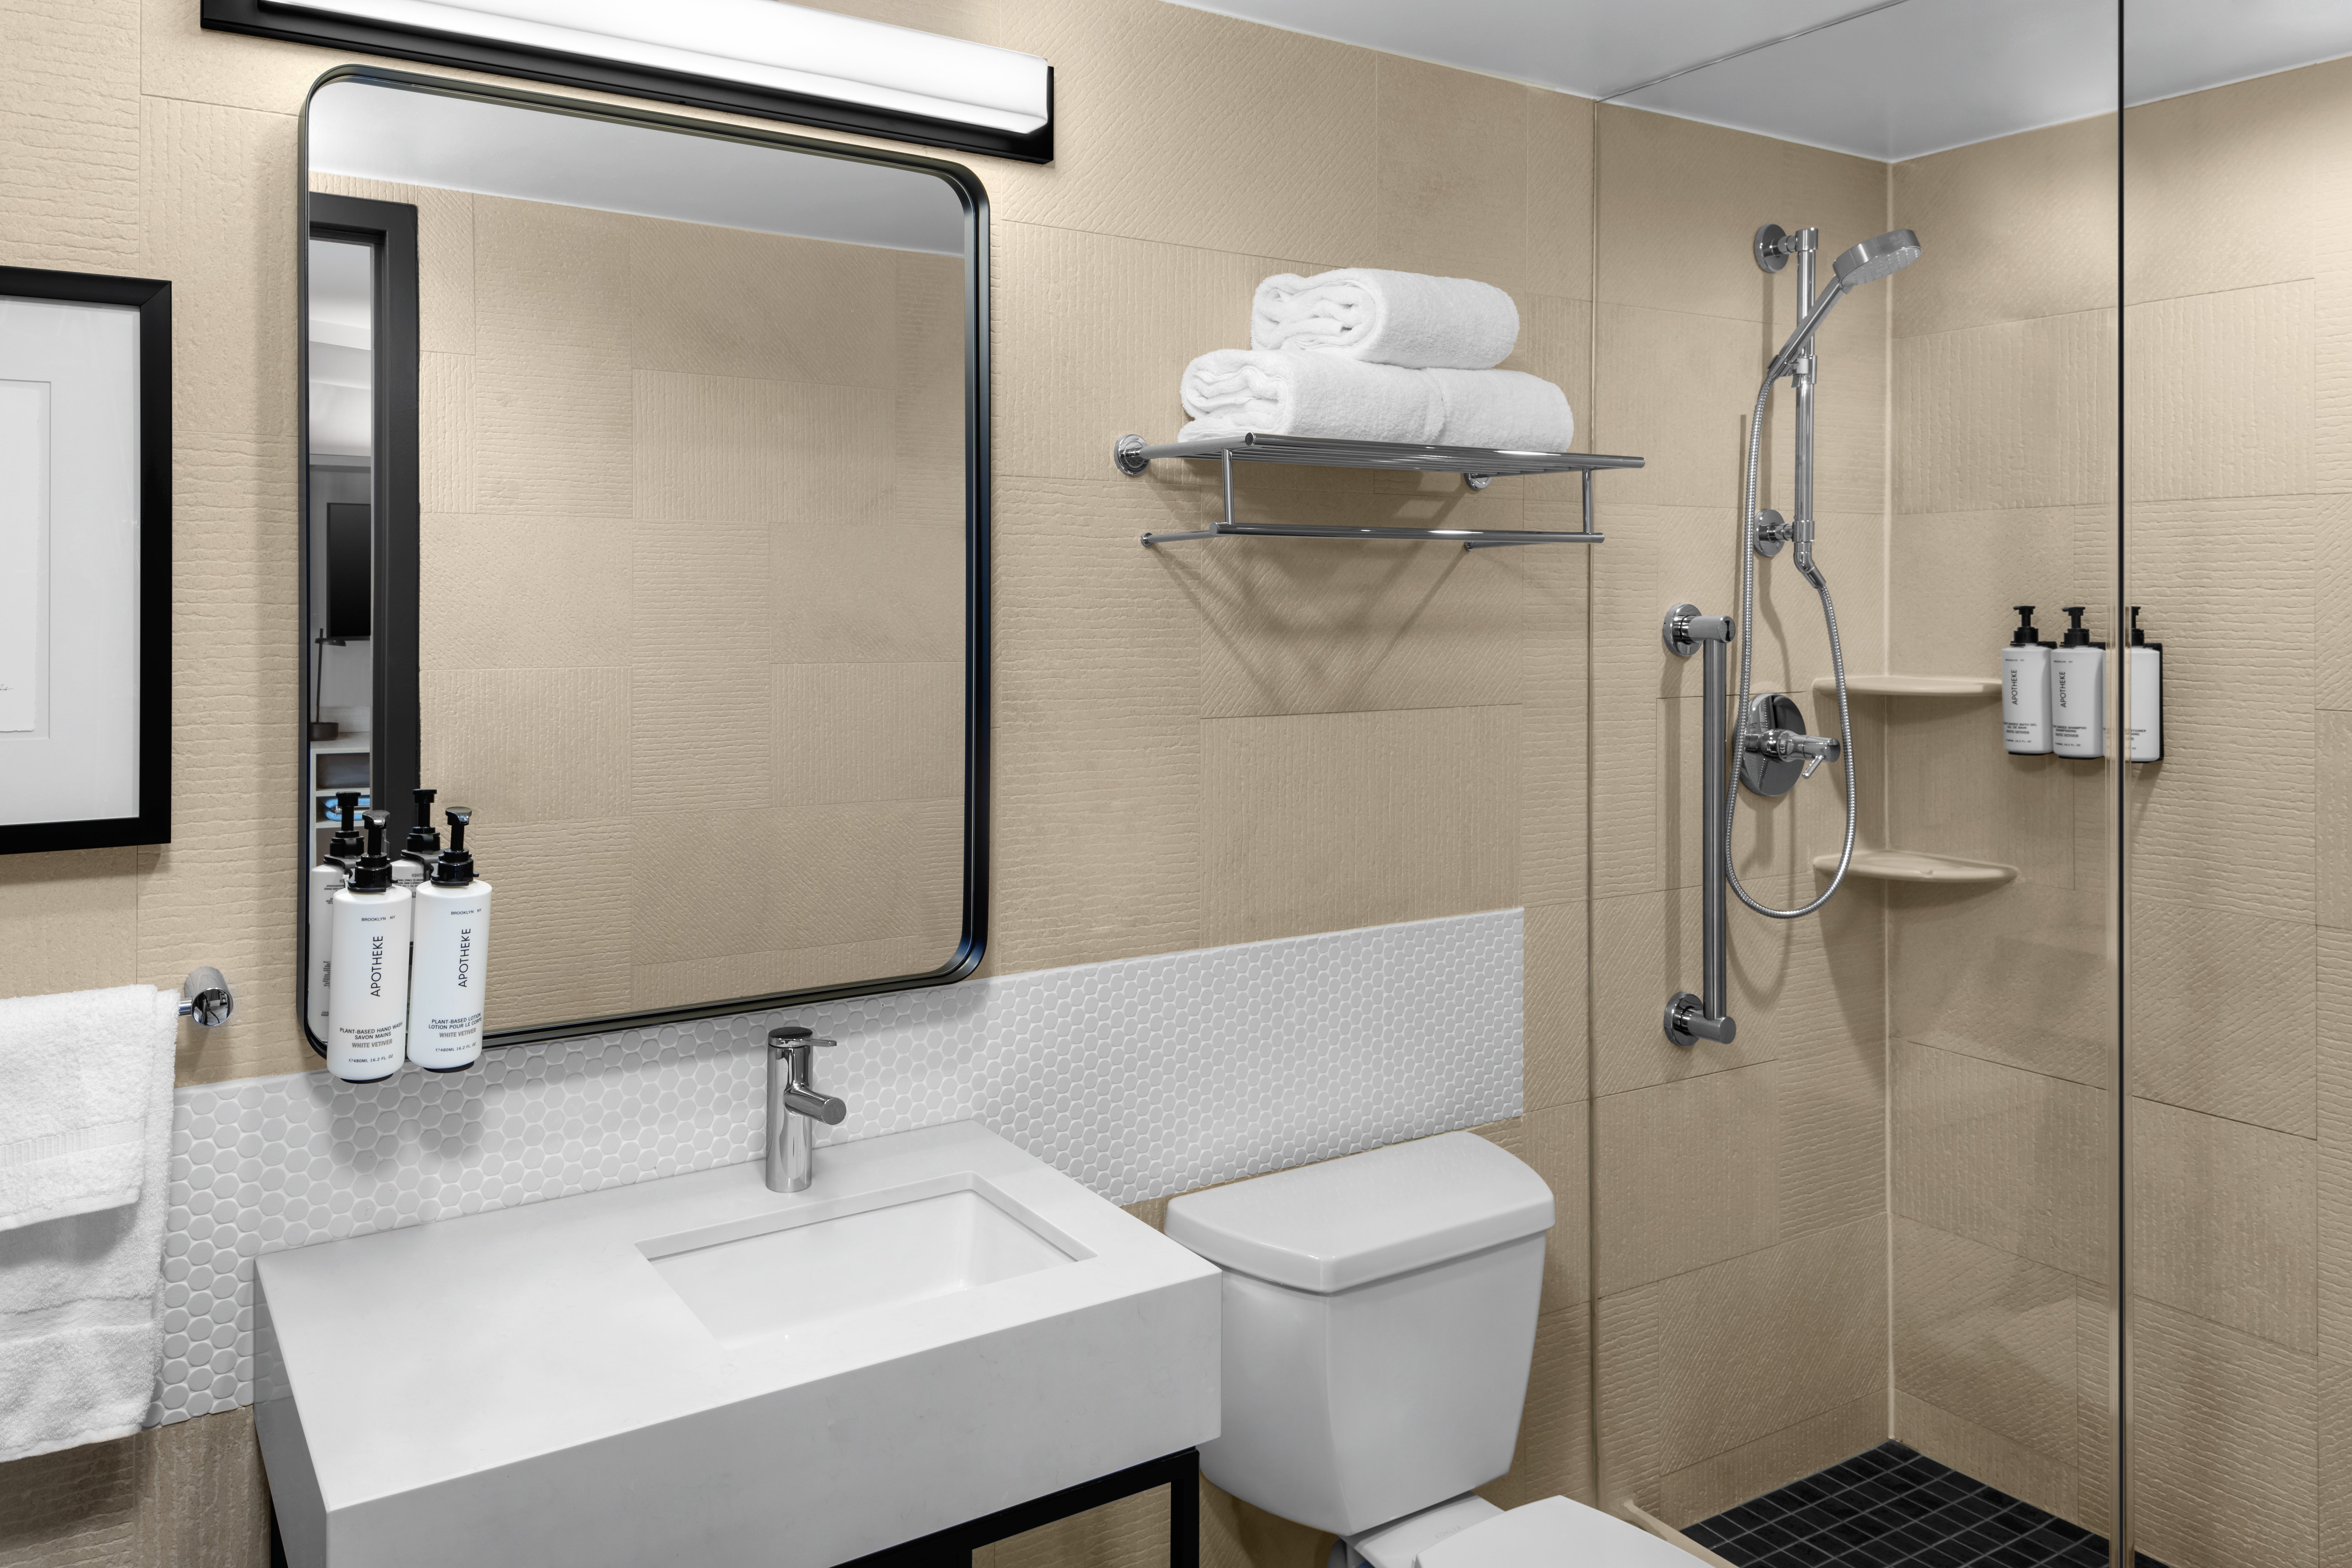 Guest baths feature Apotheke amenities & spa-inspired design.